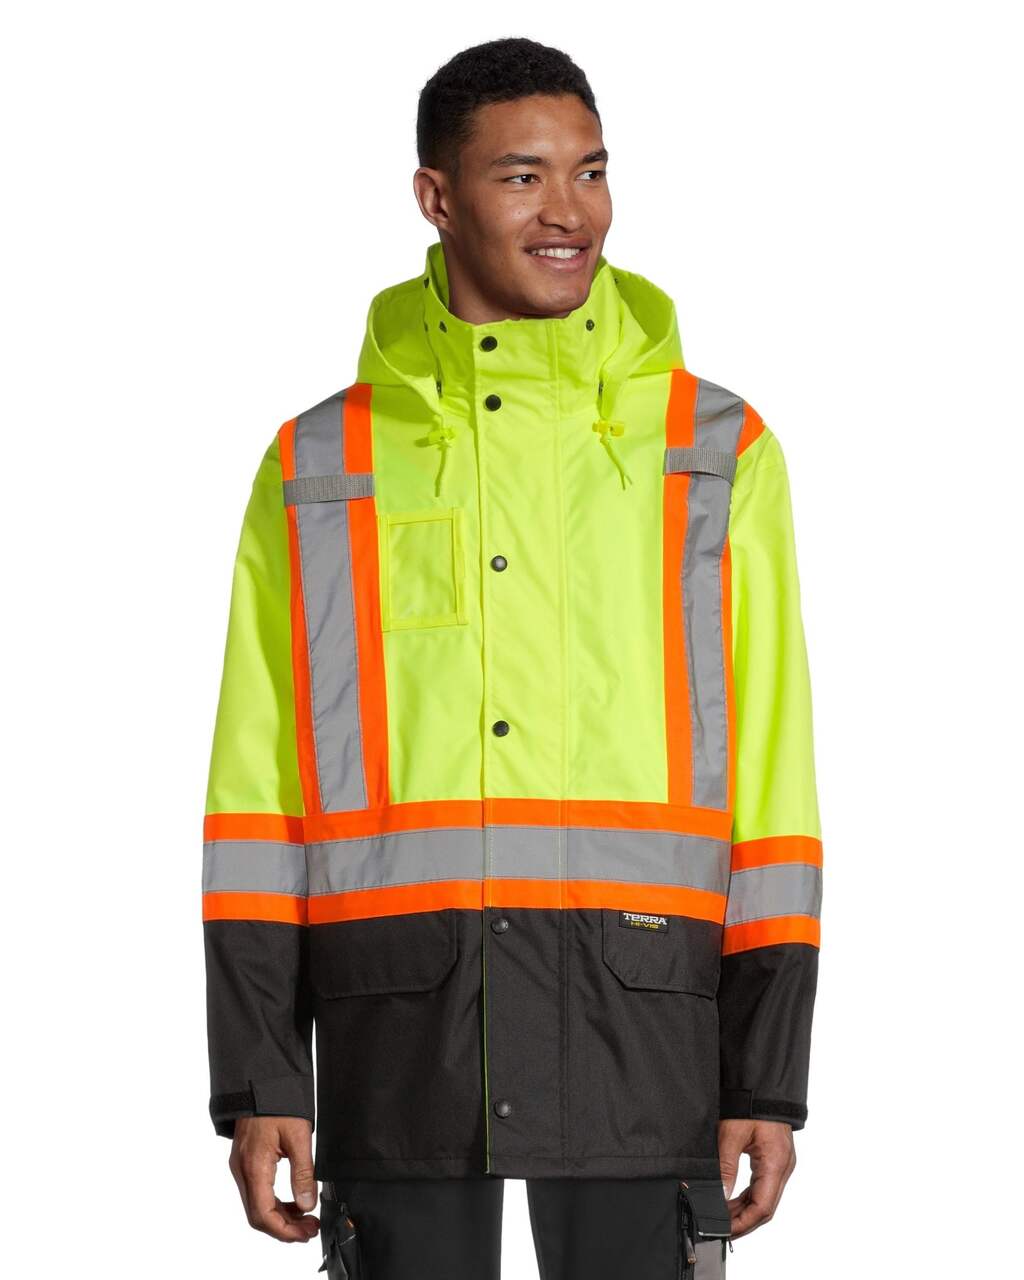 Wetskins Adult Waterproof 2-pc Rainsuit Incl. Jacket, Pants with